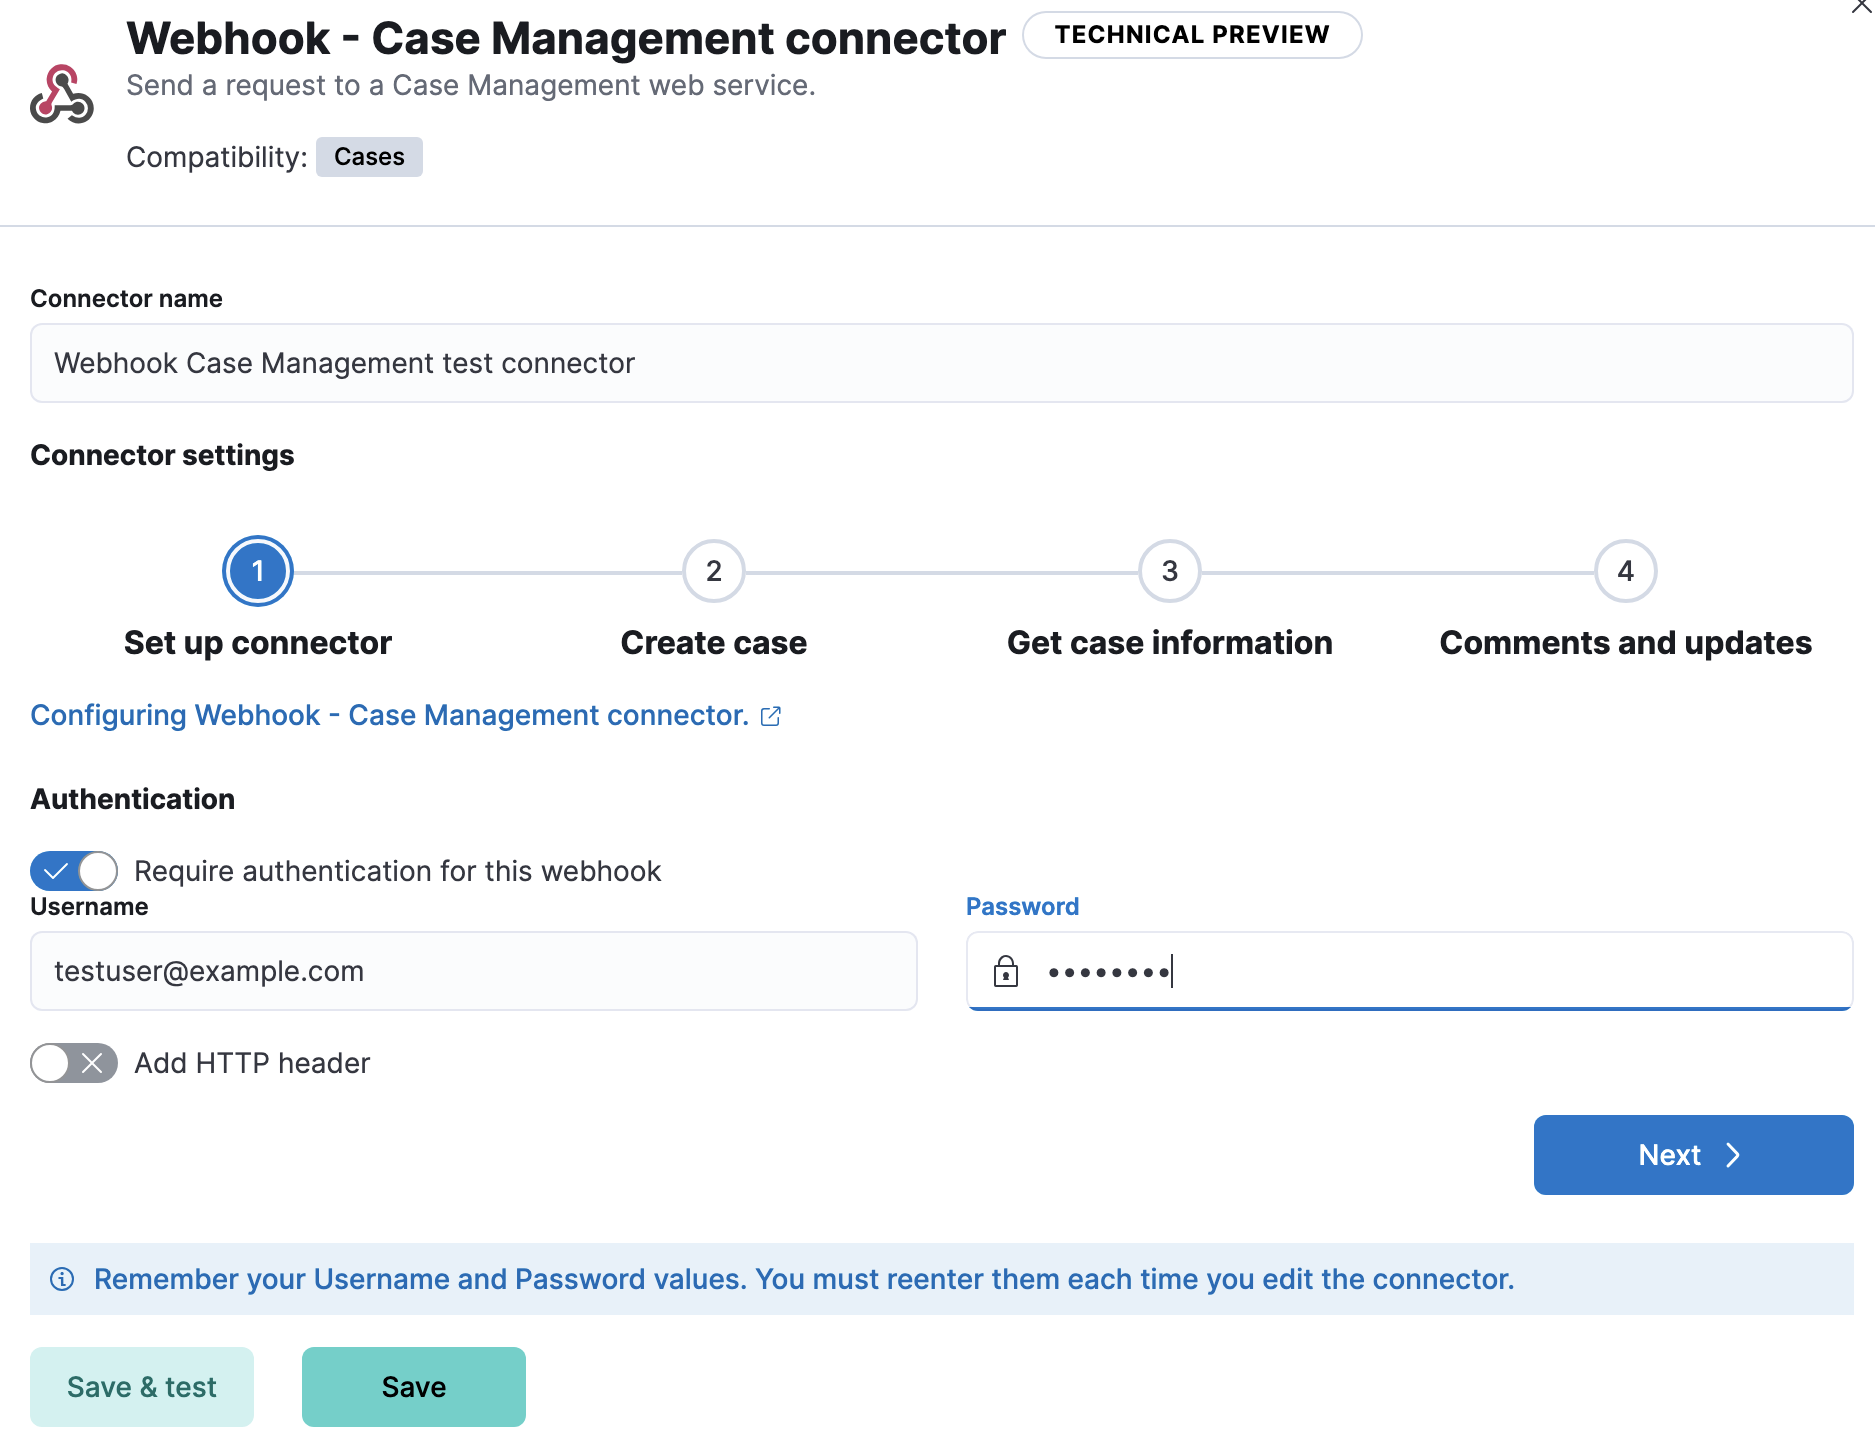 Set authentication details in the Webhook - Case Management connector